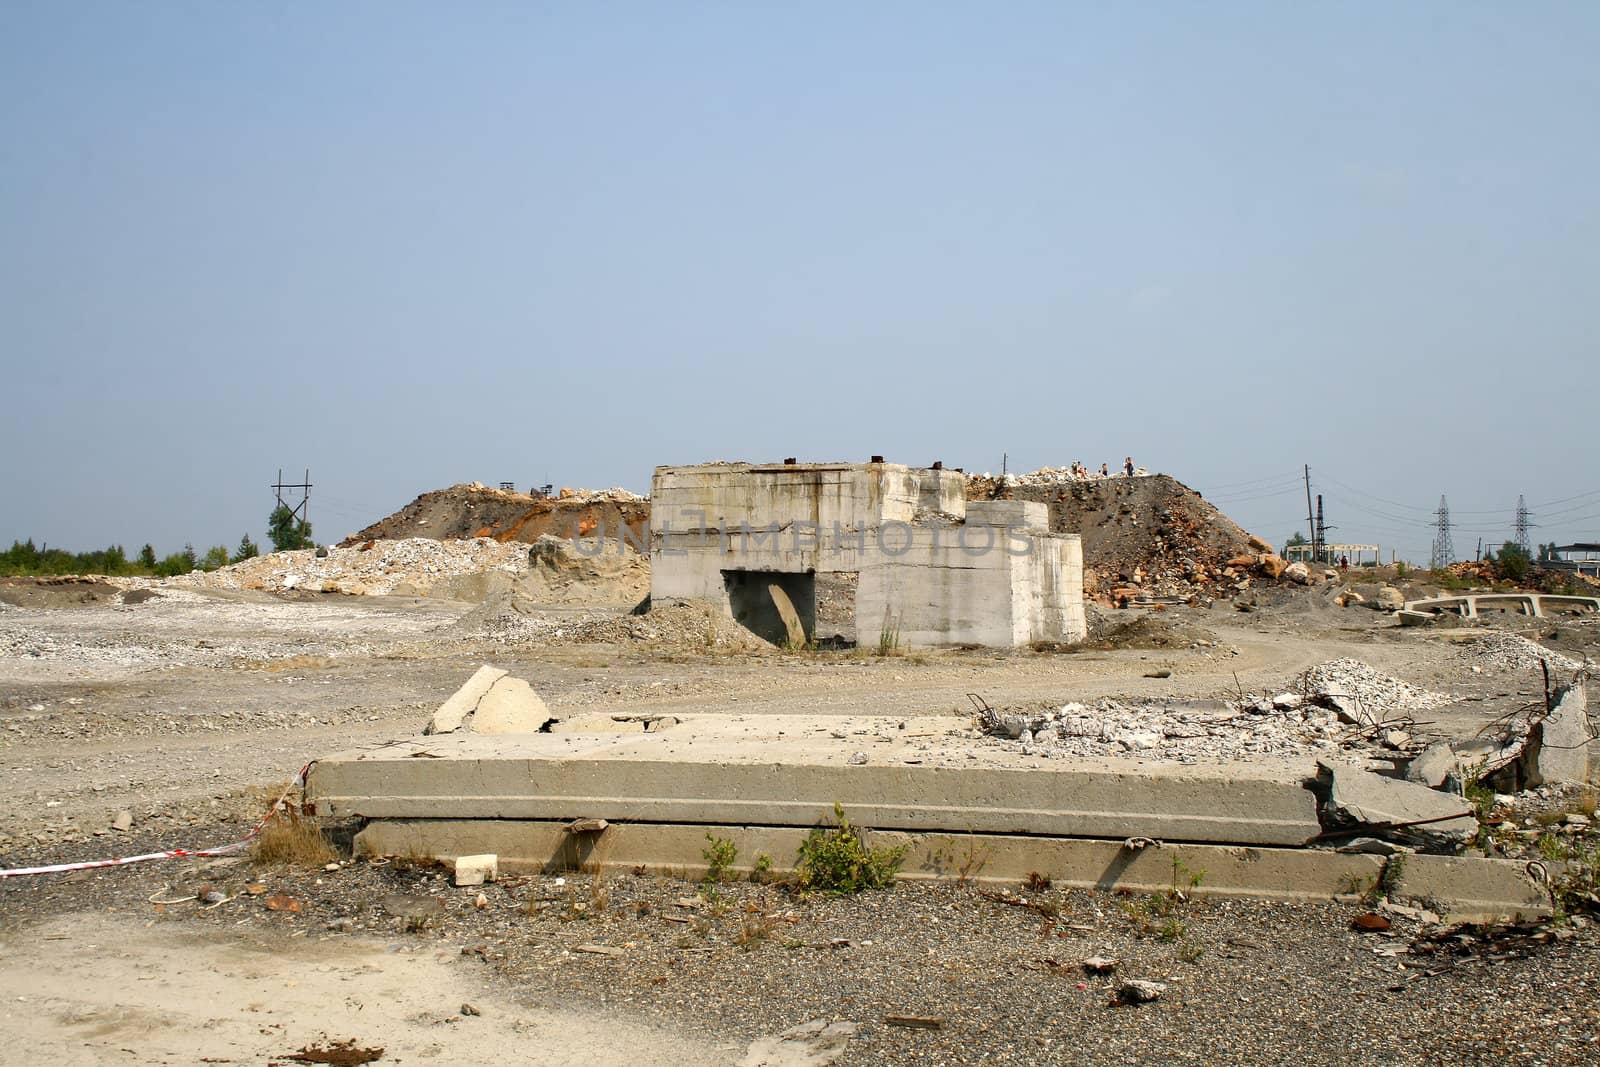 Concrete debris in an opencast mine